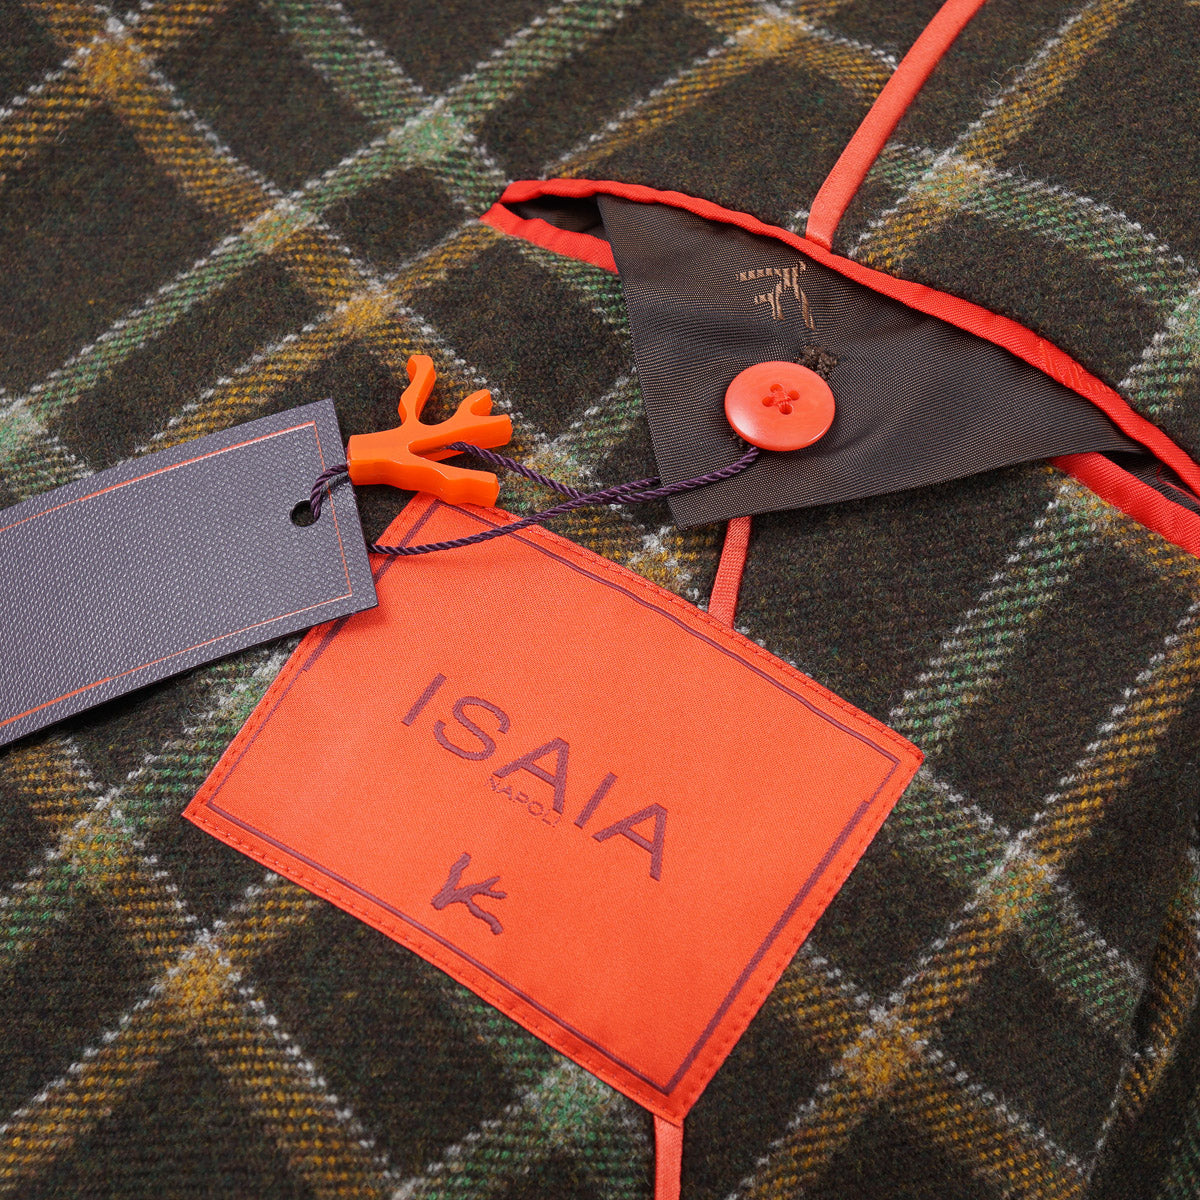 Isaia Soft Flannel Wool Sport Coat - Top Shelf Apparel